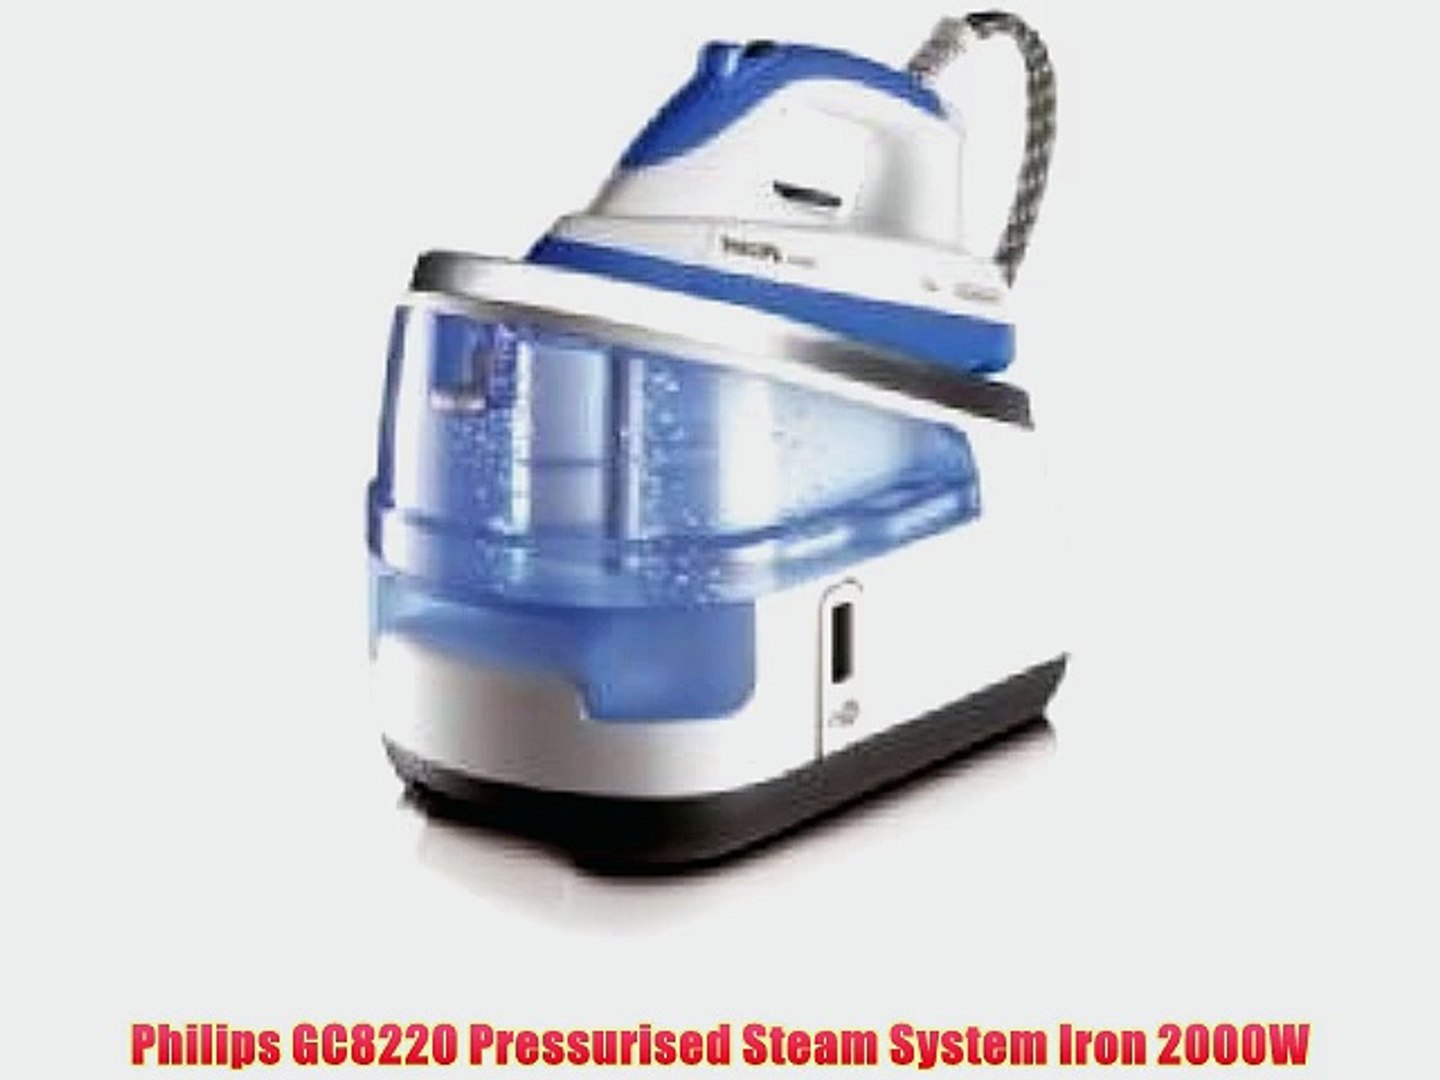 Philips GC8220 Pressurised Steam System Iron 2000W - video Dailymotion